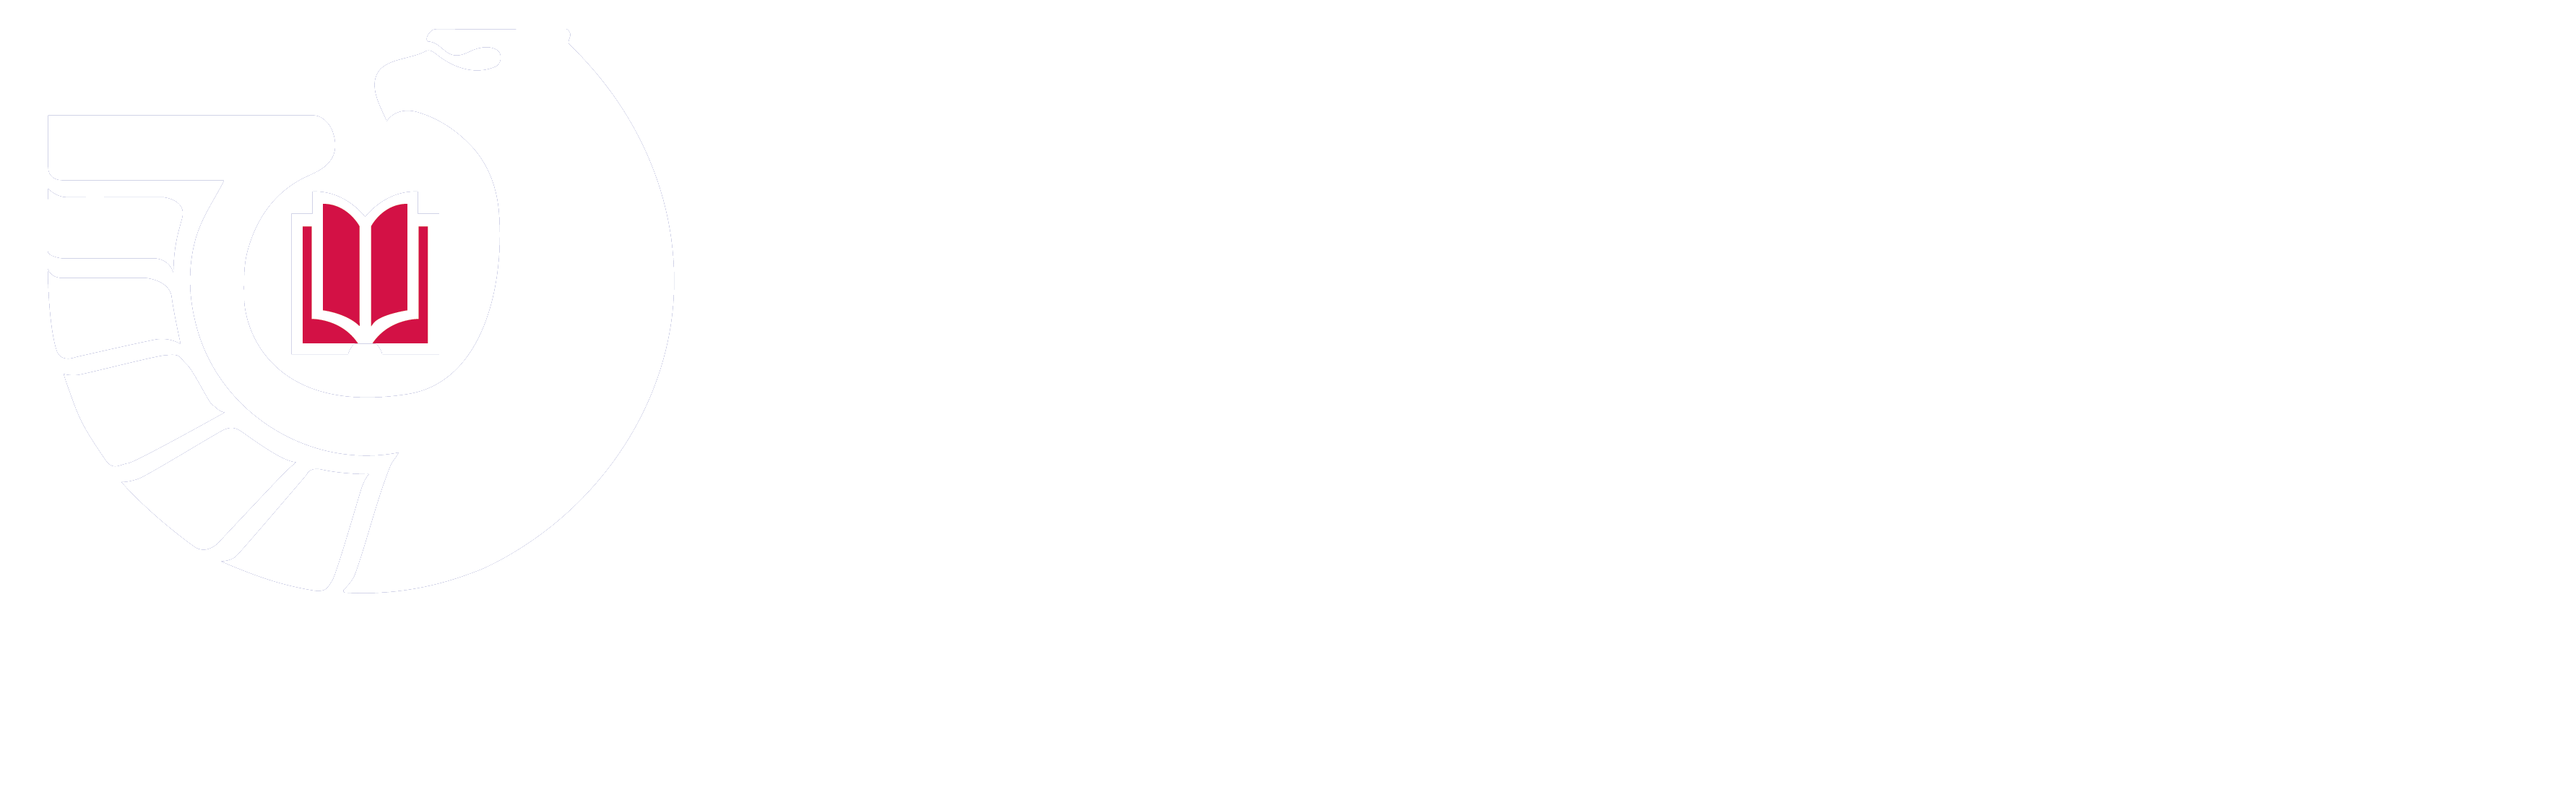 Federal Library Depository Program Logo